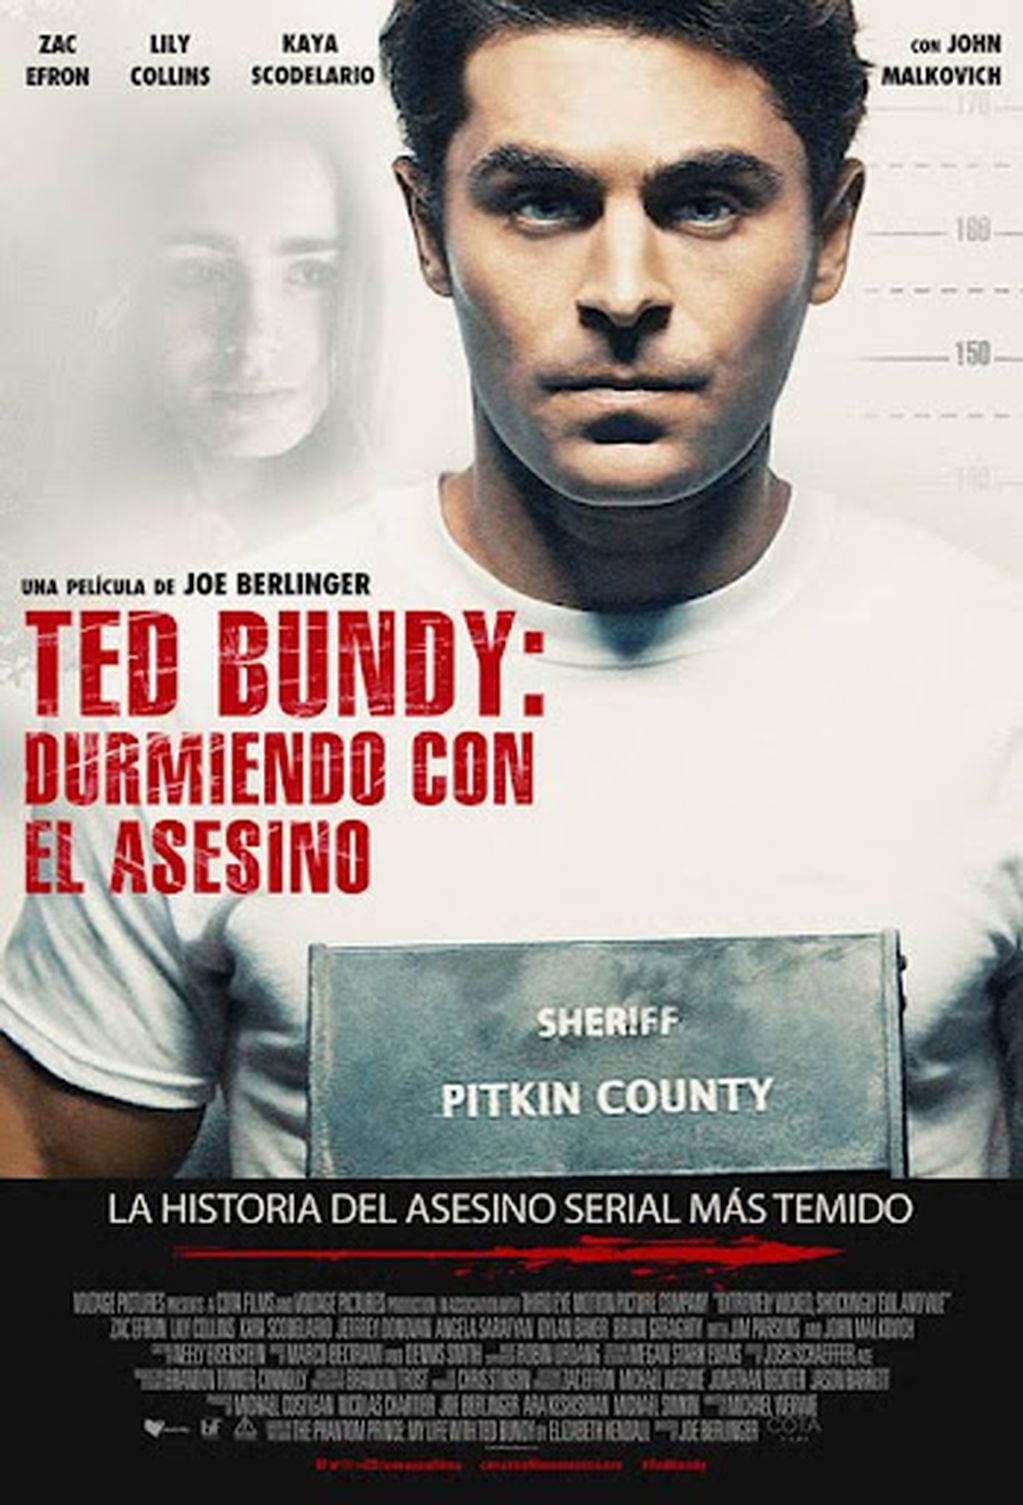 TED BUNDY con Zac Efron.